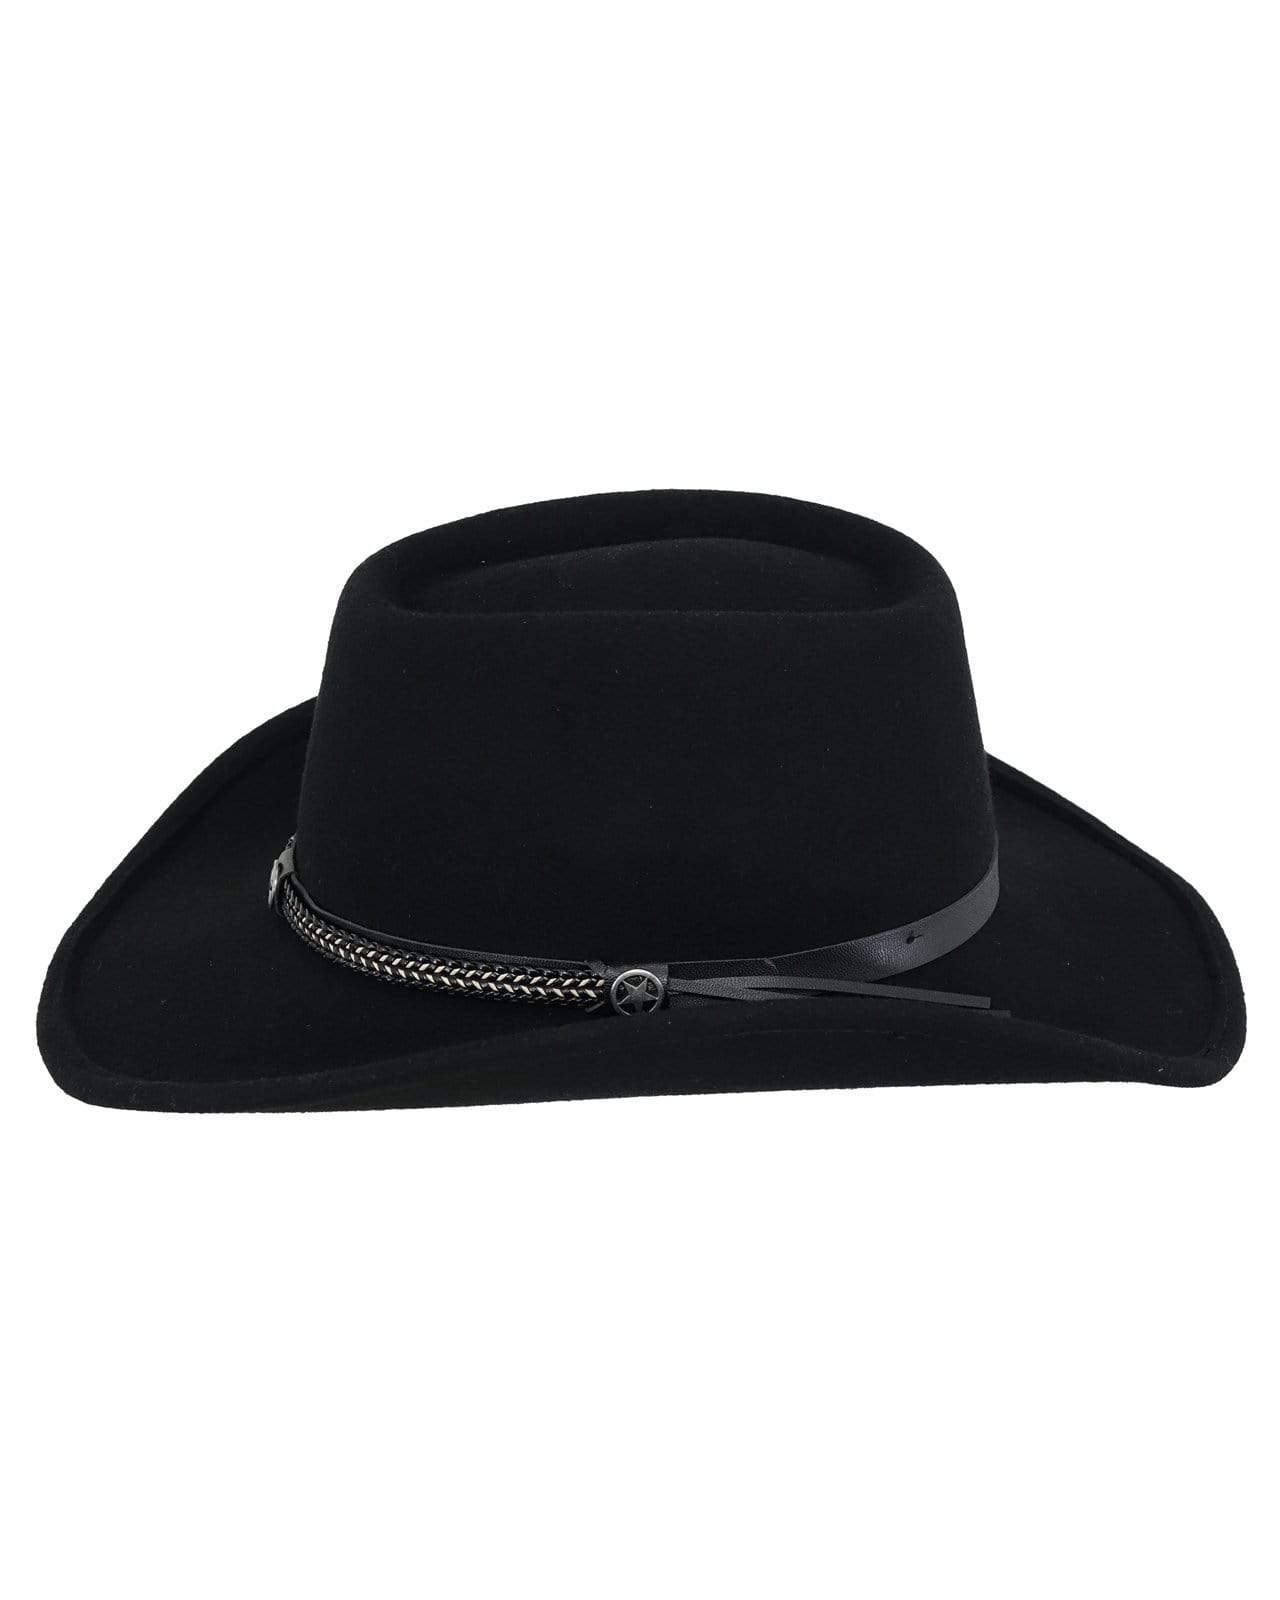 Outback Trading Company Durango Hats